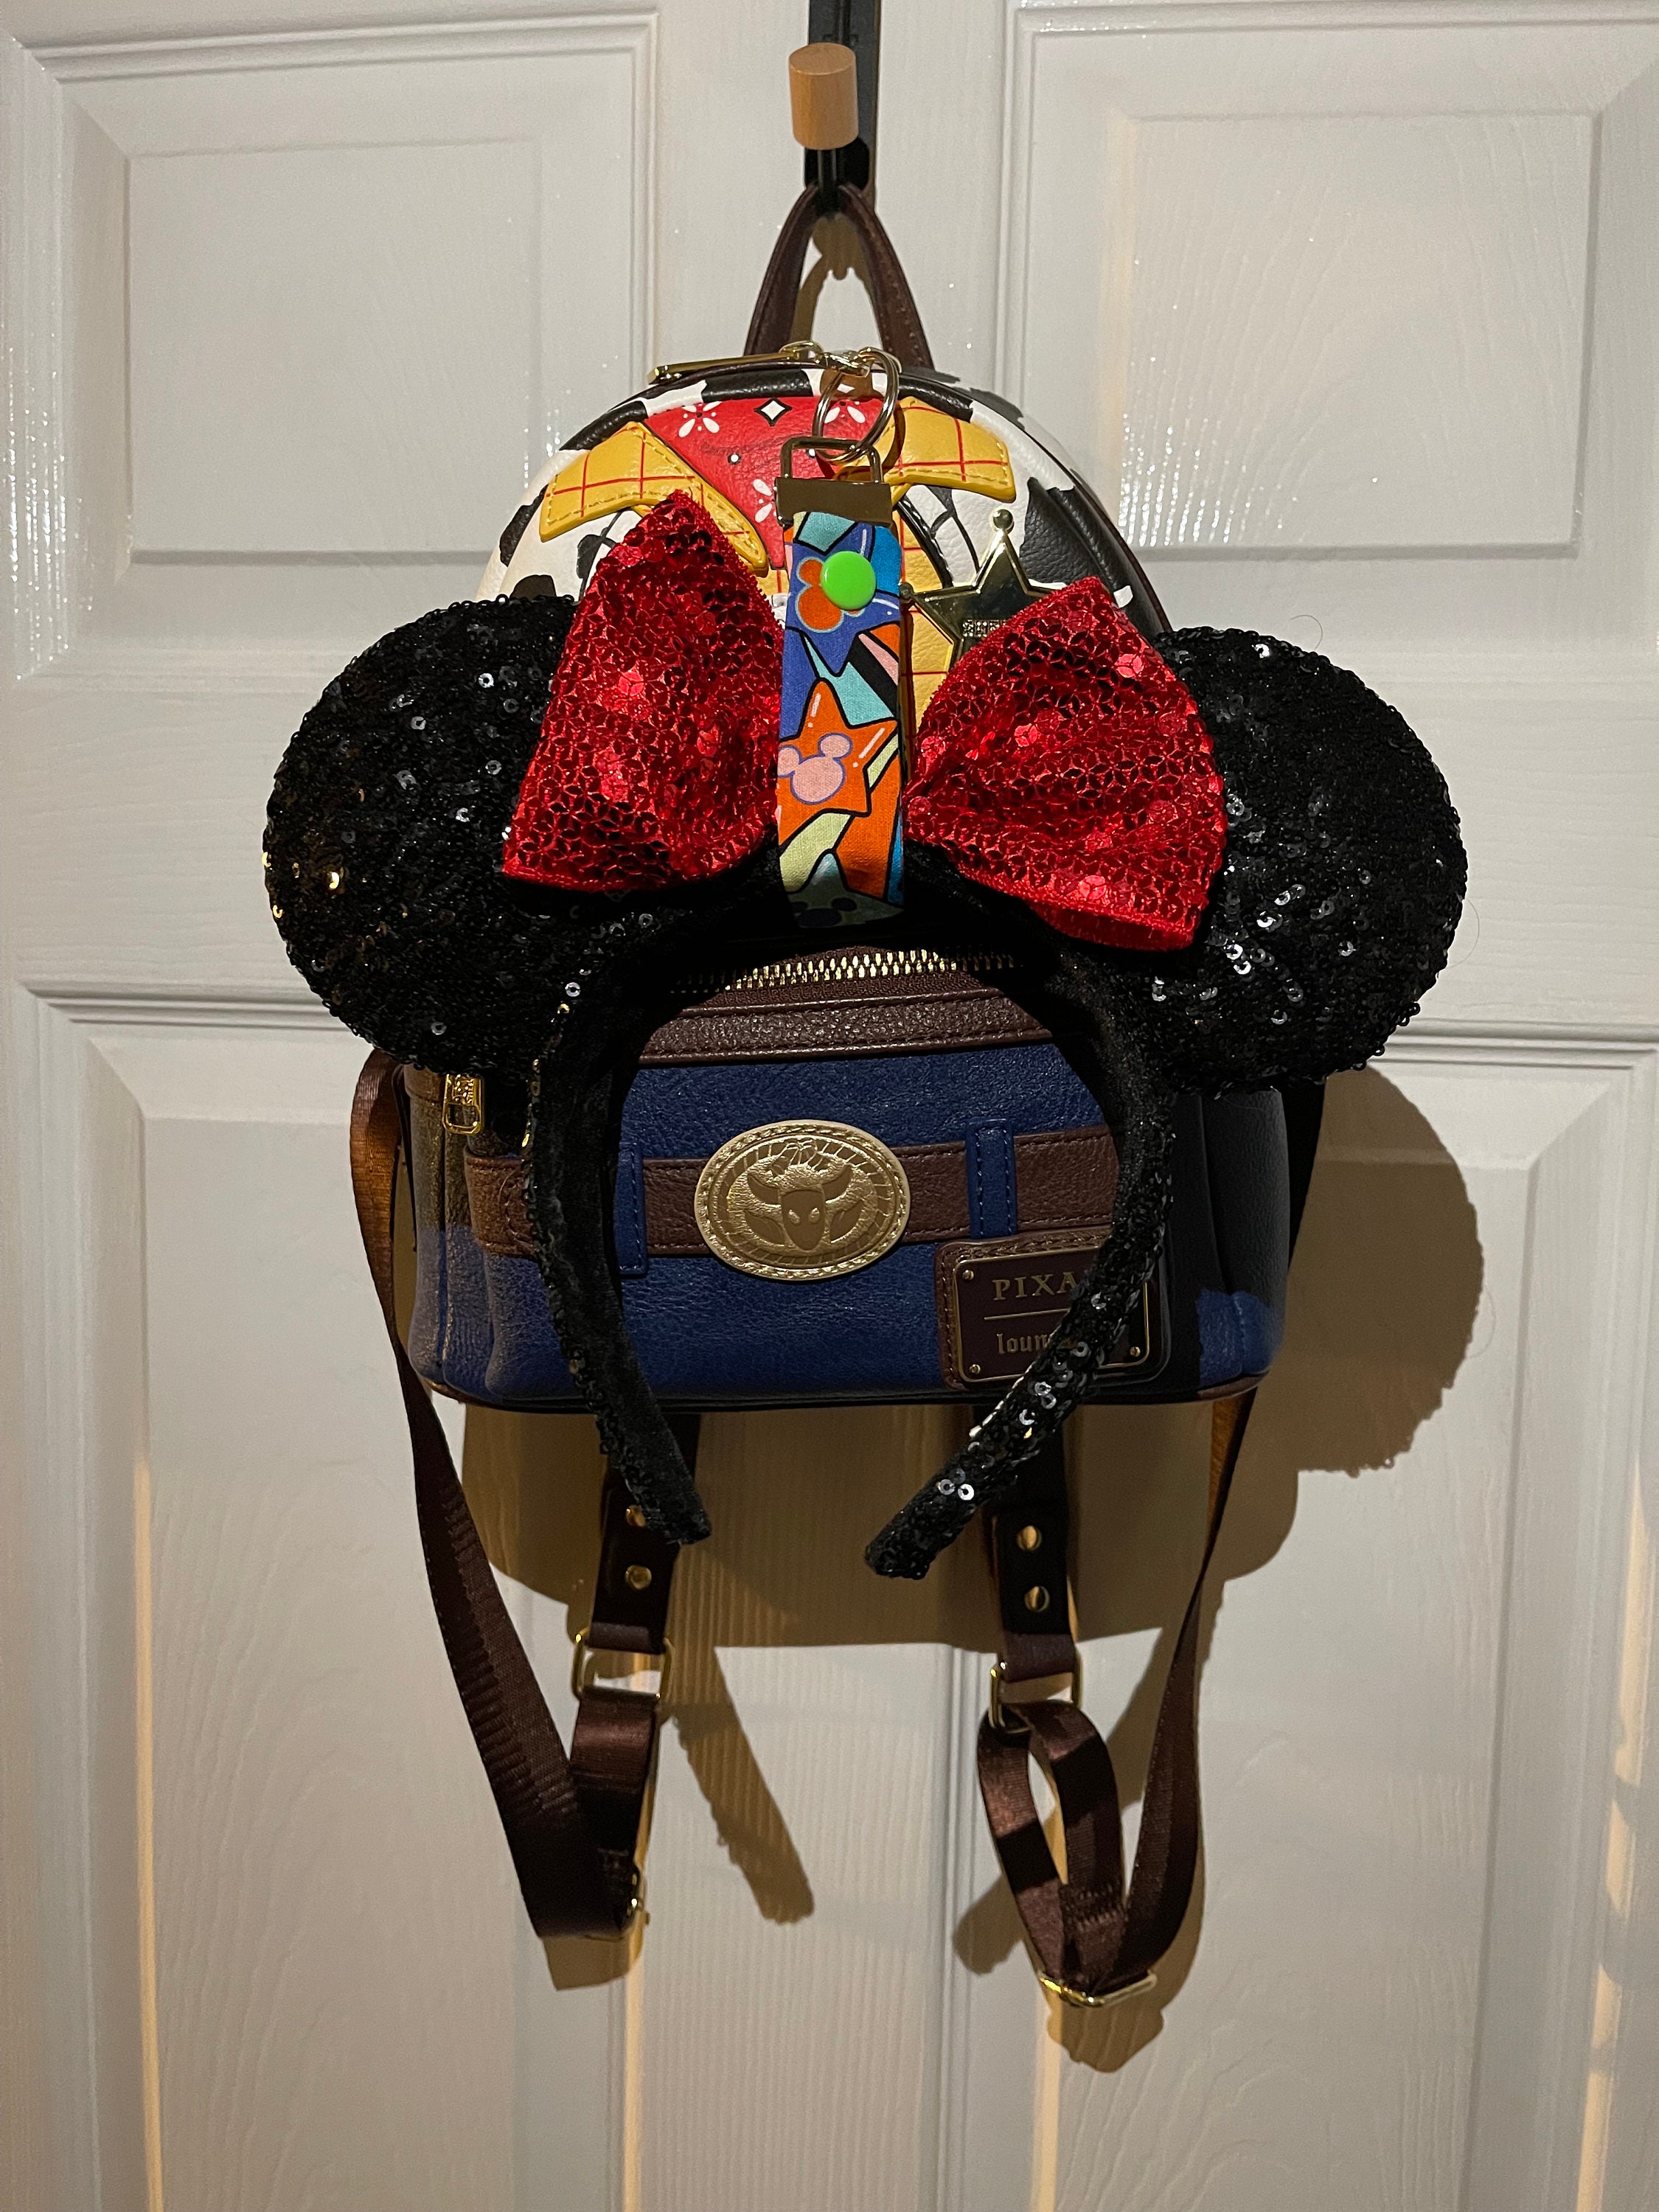 SET 1 Mickey ears holder/saver for bag strap/backpack.